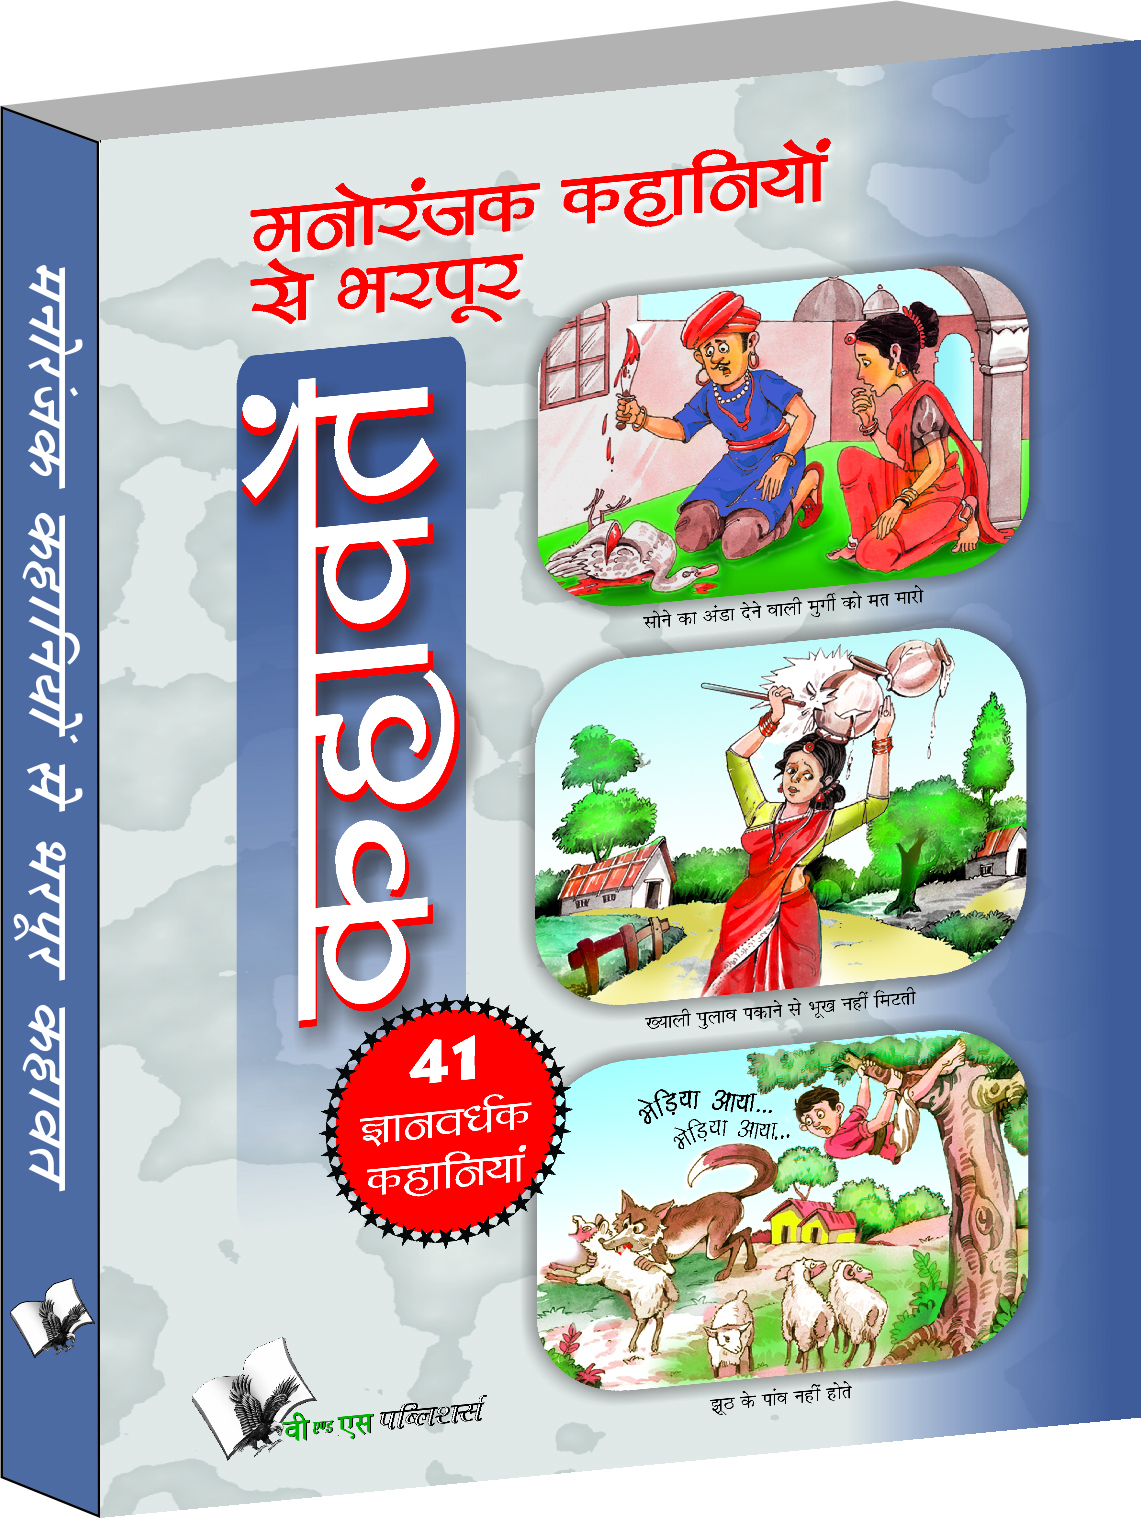 Manoranjak Kahaniyon Se Bharpoor Kahavate-Interesting and entertaining stories for young children